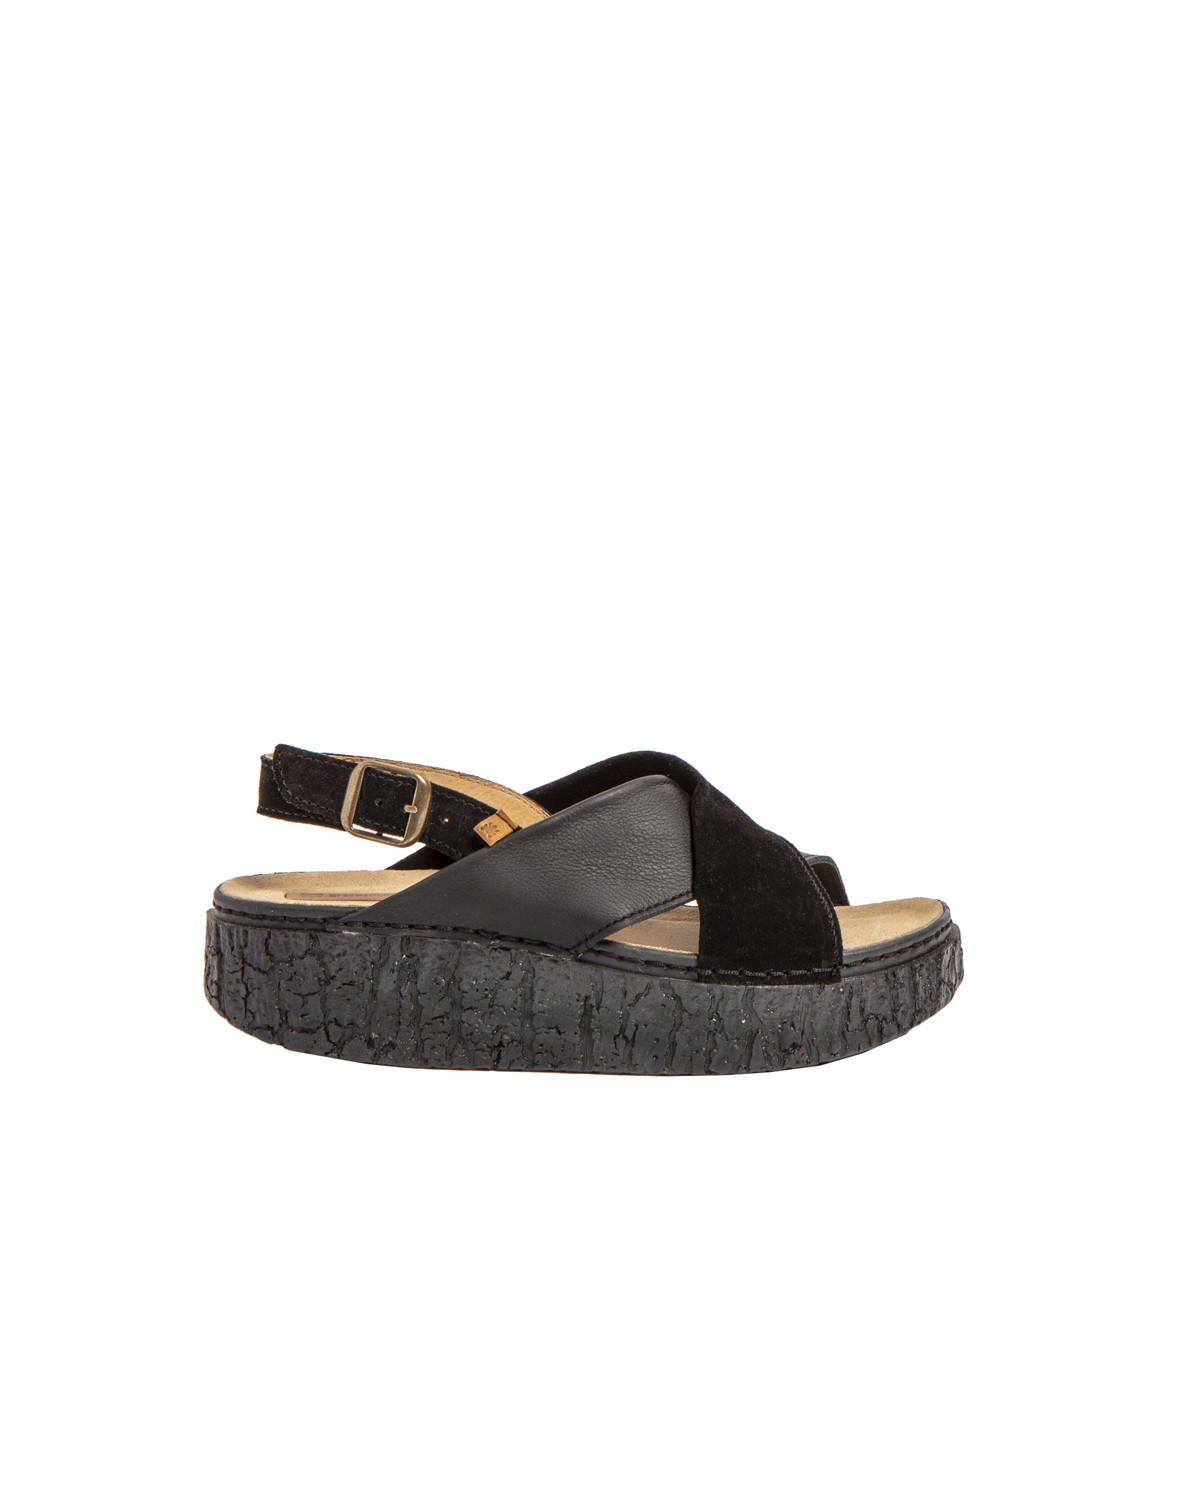 Sandales confortables compensées en cuir torsadé - Noir - El naturalista